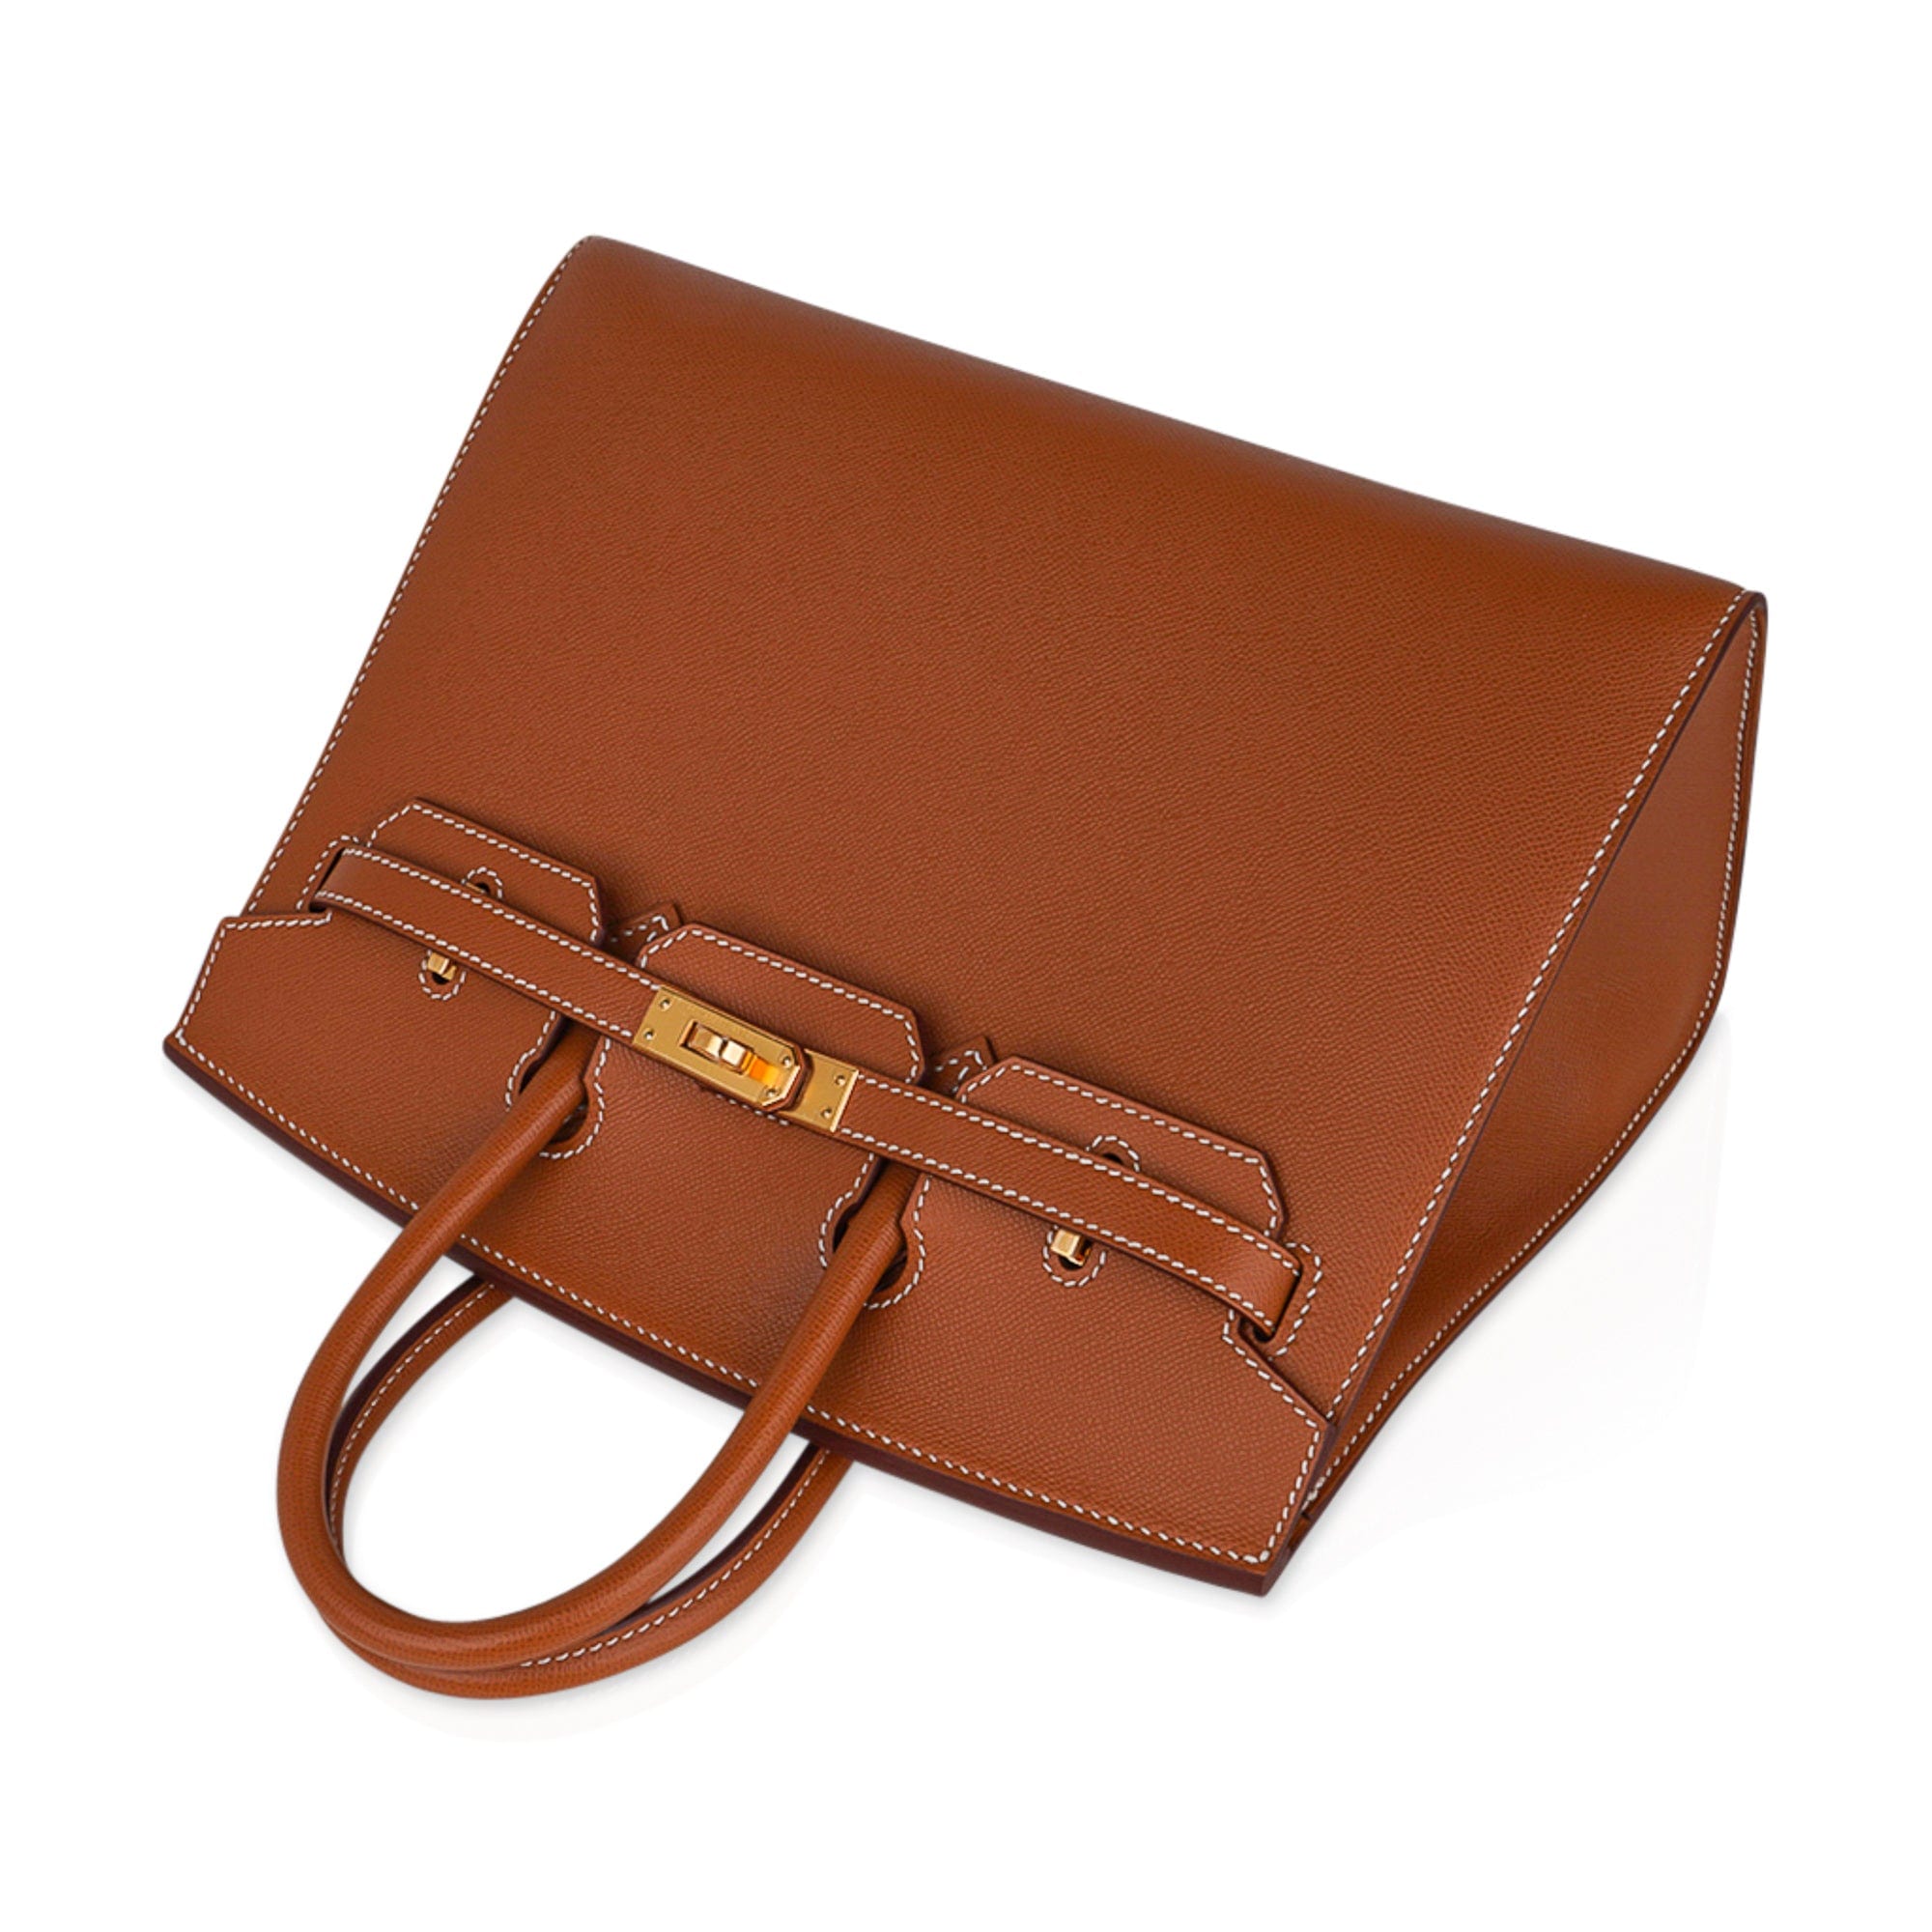 🐎 Hermès 25cm Birkin Fauve Barenia Leather Gold Hardware